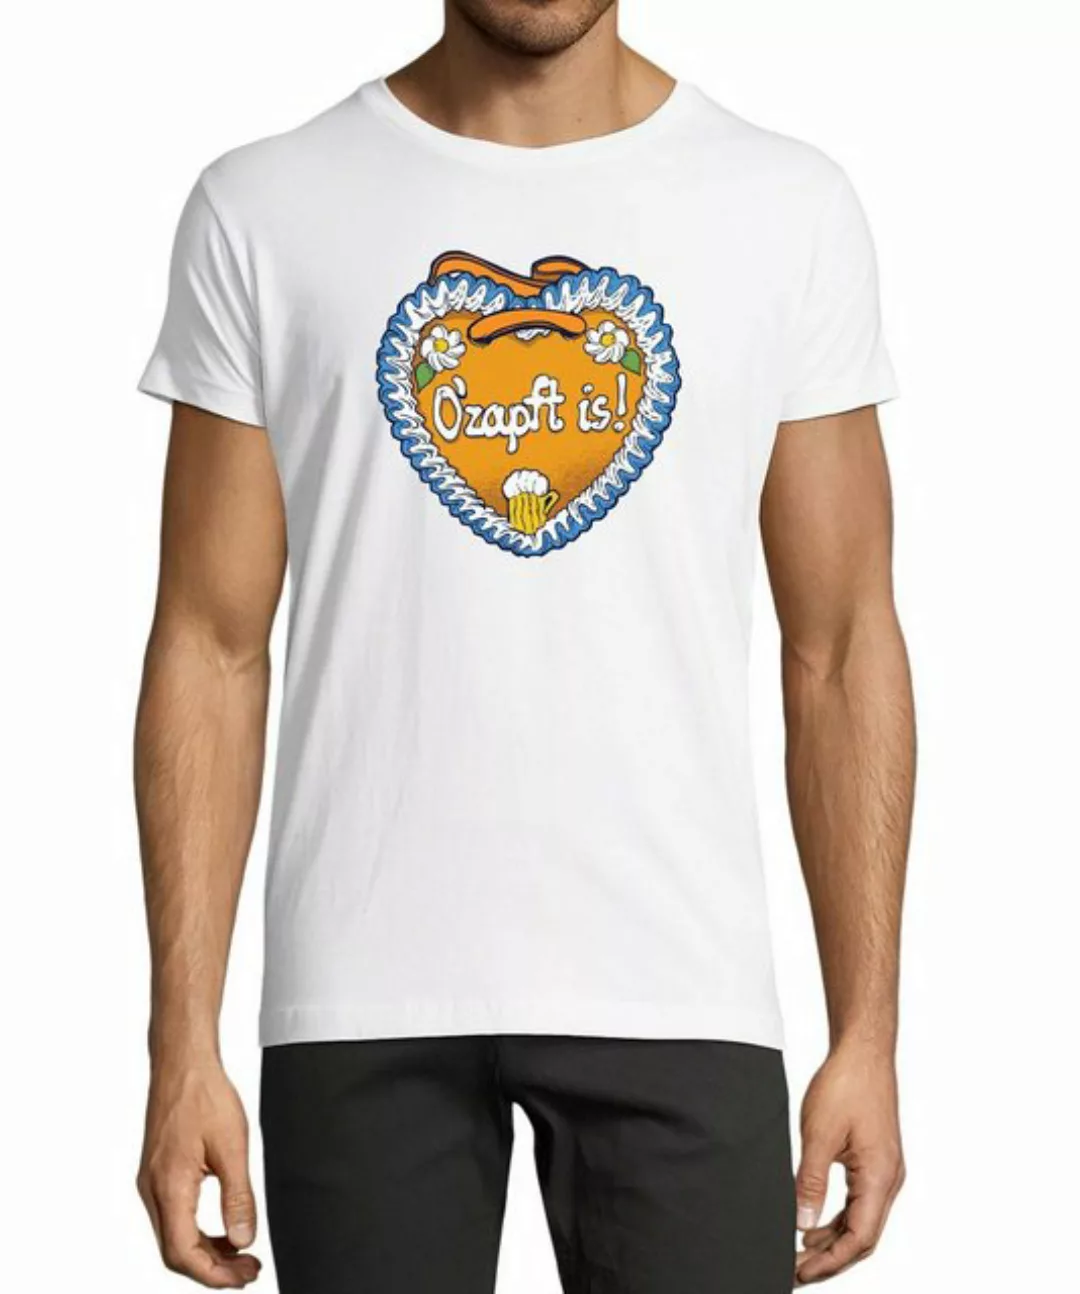 MyDesign24 T-Shirt Herren Fun Print Shirt - Trinkshirt O'Zapft is Baumwolls günstig online kaufen